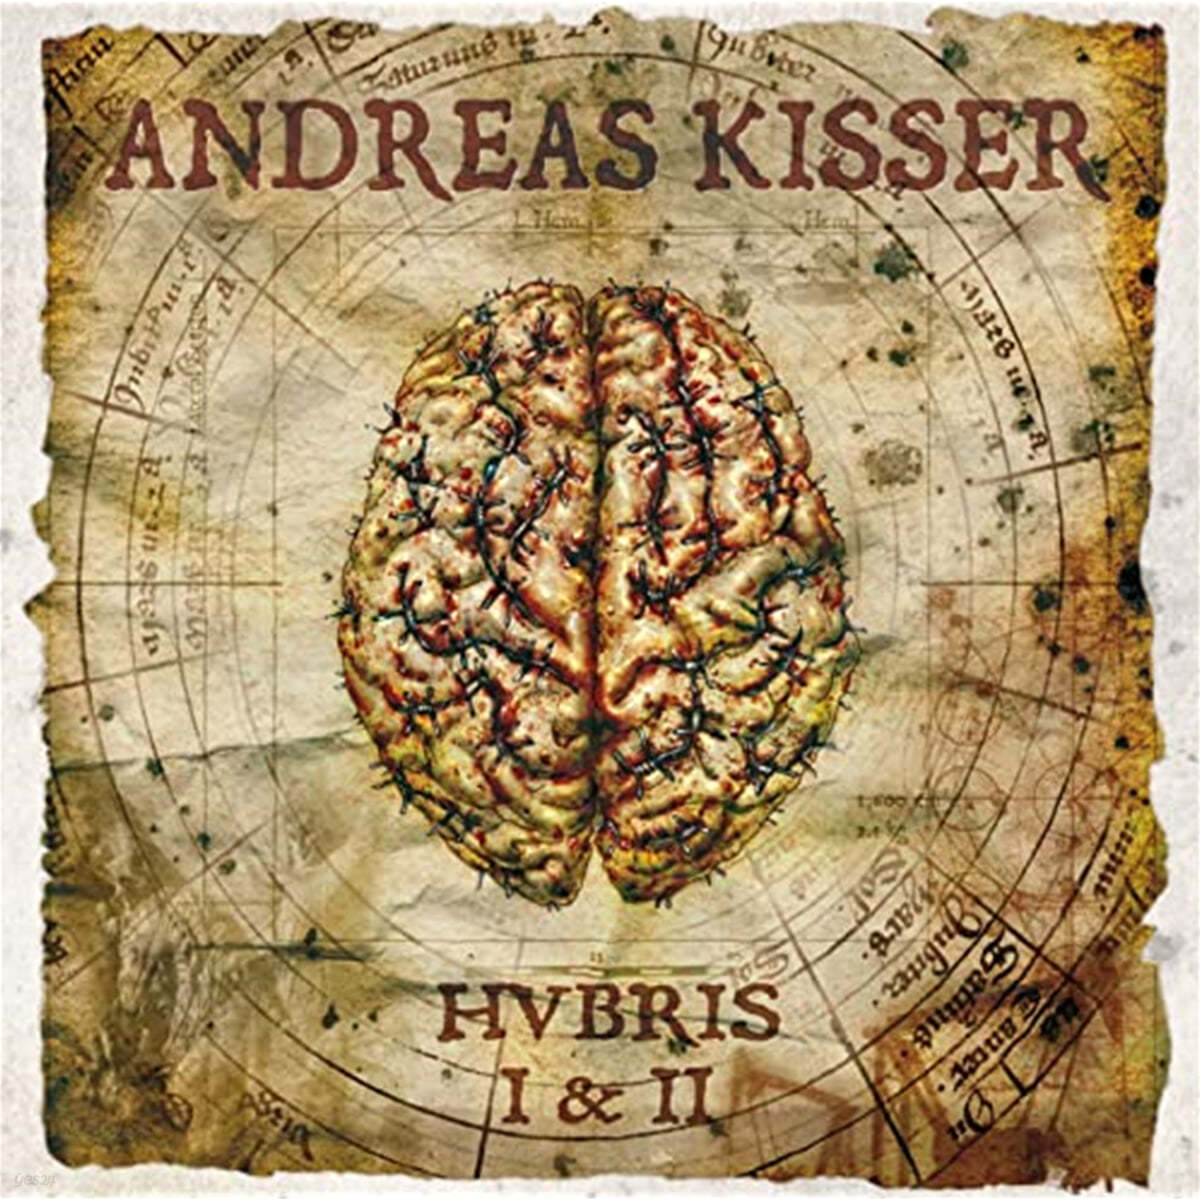 Andreas Kisser (안드레아스 키서) - Hubris I & II 